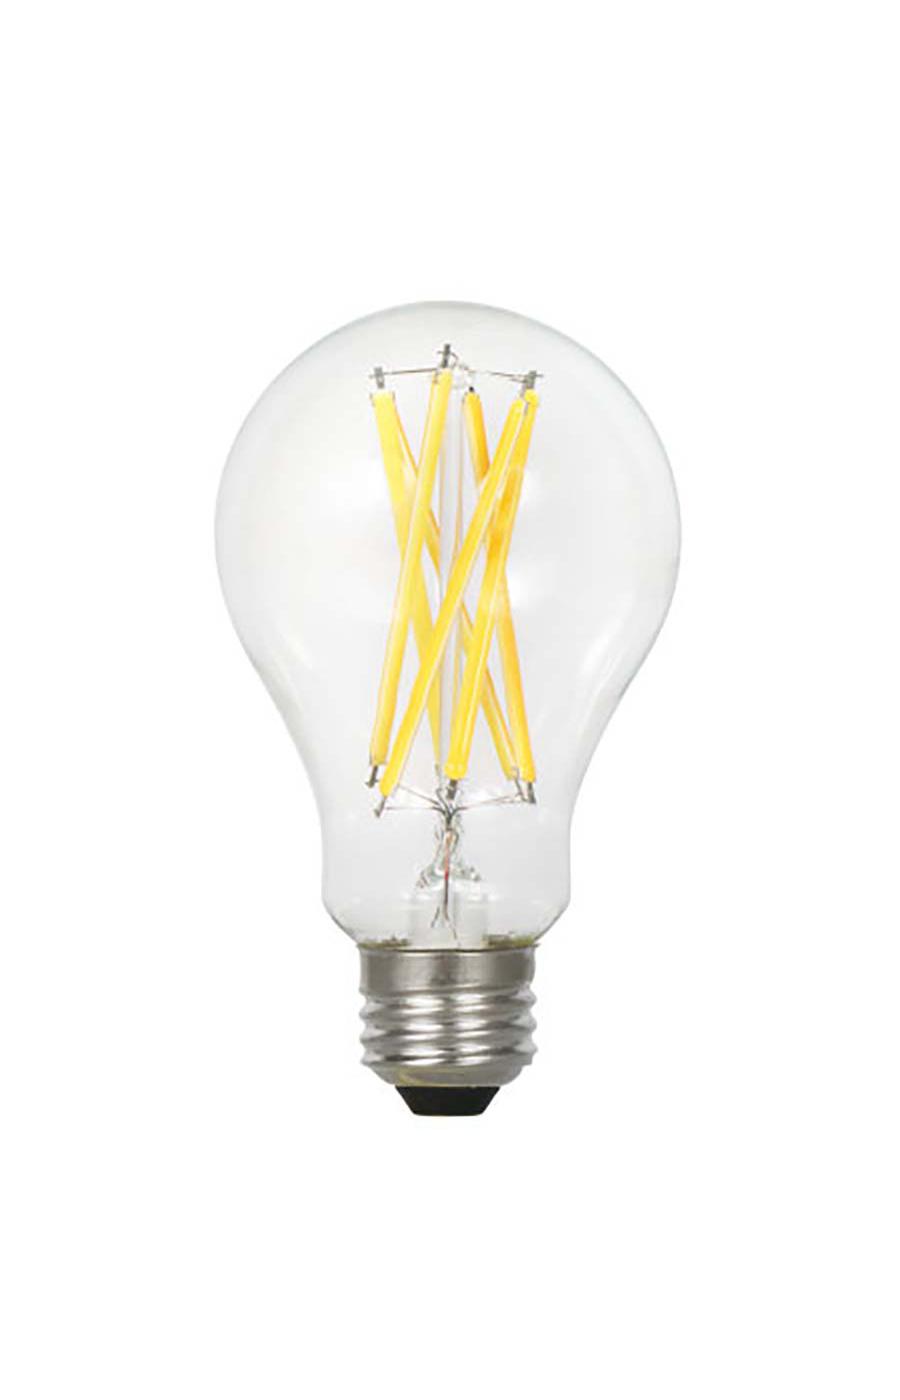 Sylvania TruWave A21 100-Watt Clear LED Light Bulbs - Soft White; image 2 of 2